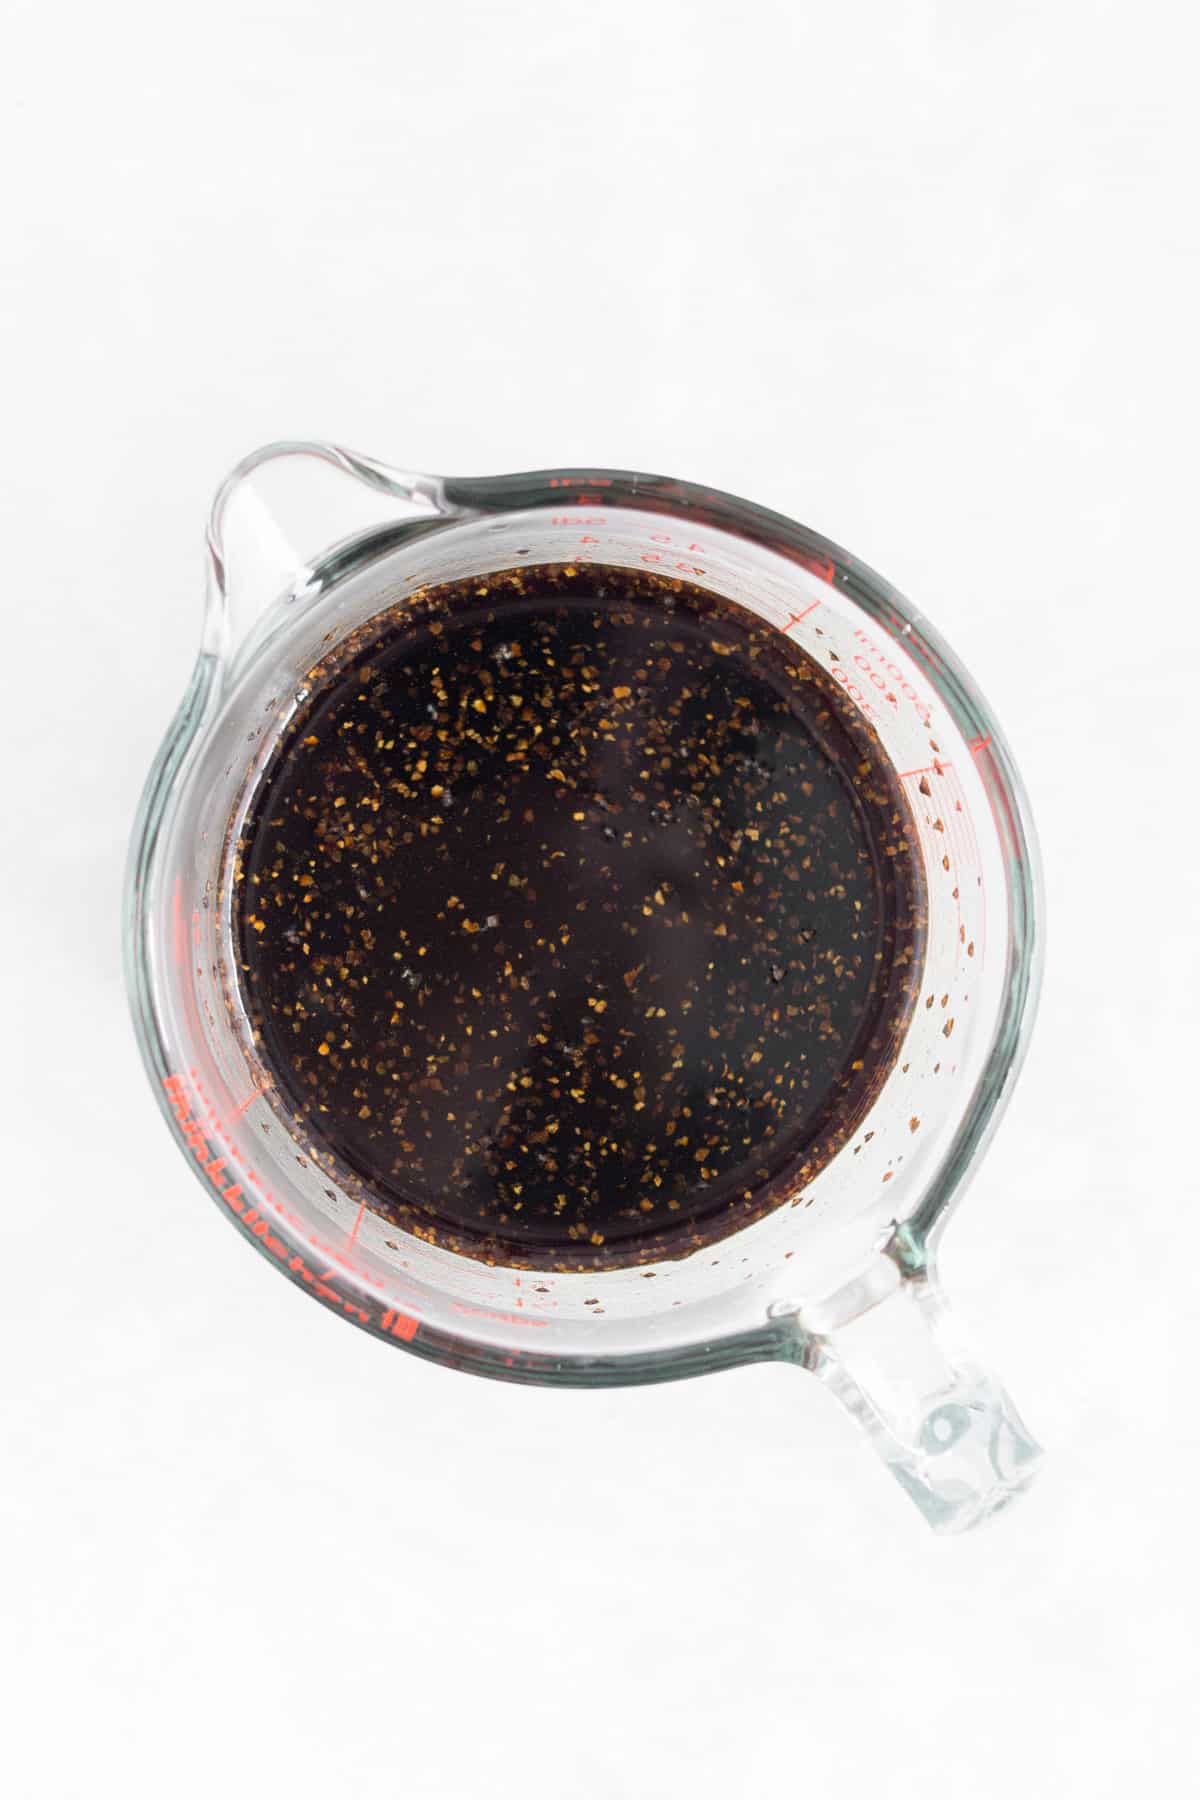 Black pepper sauce in a measuring cup.